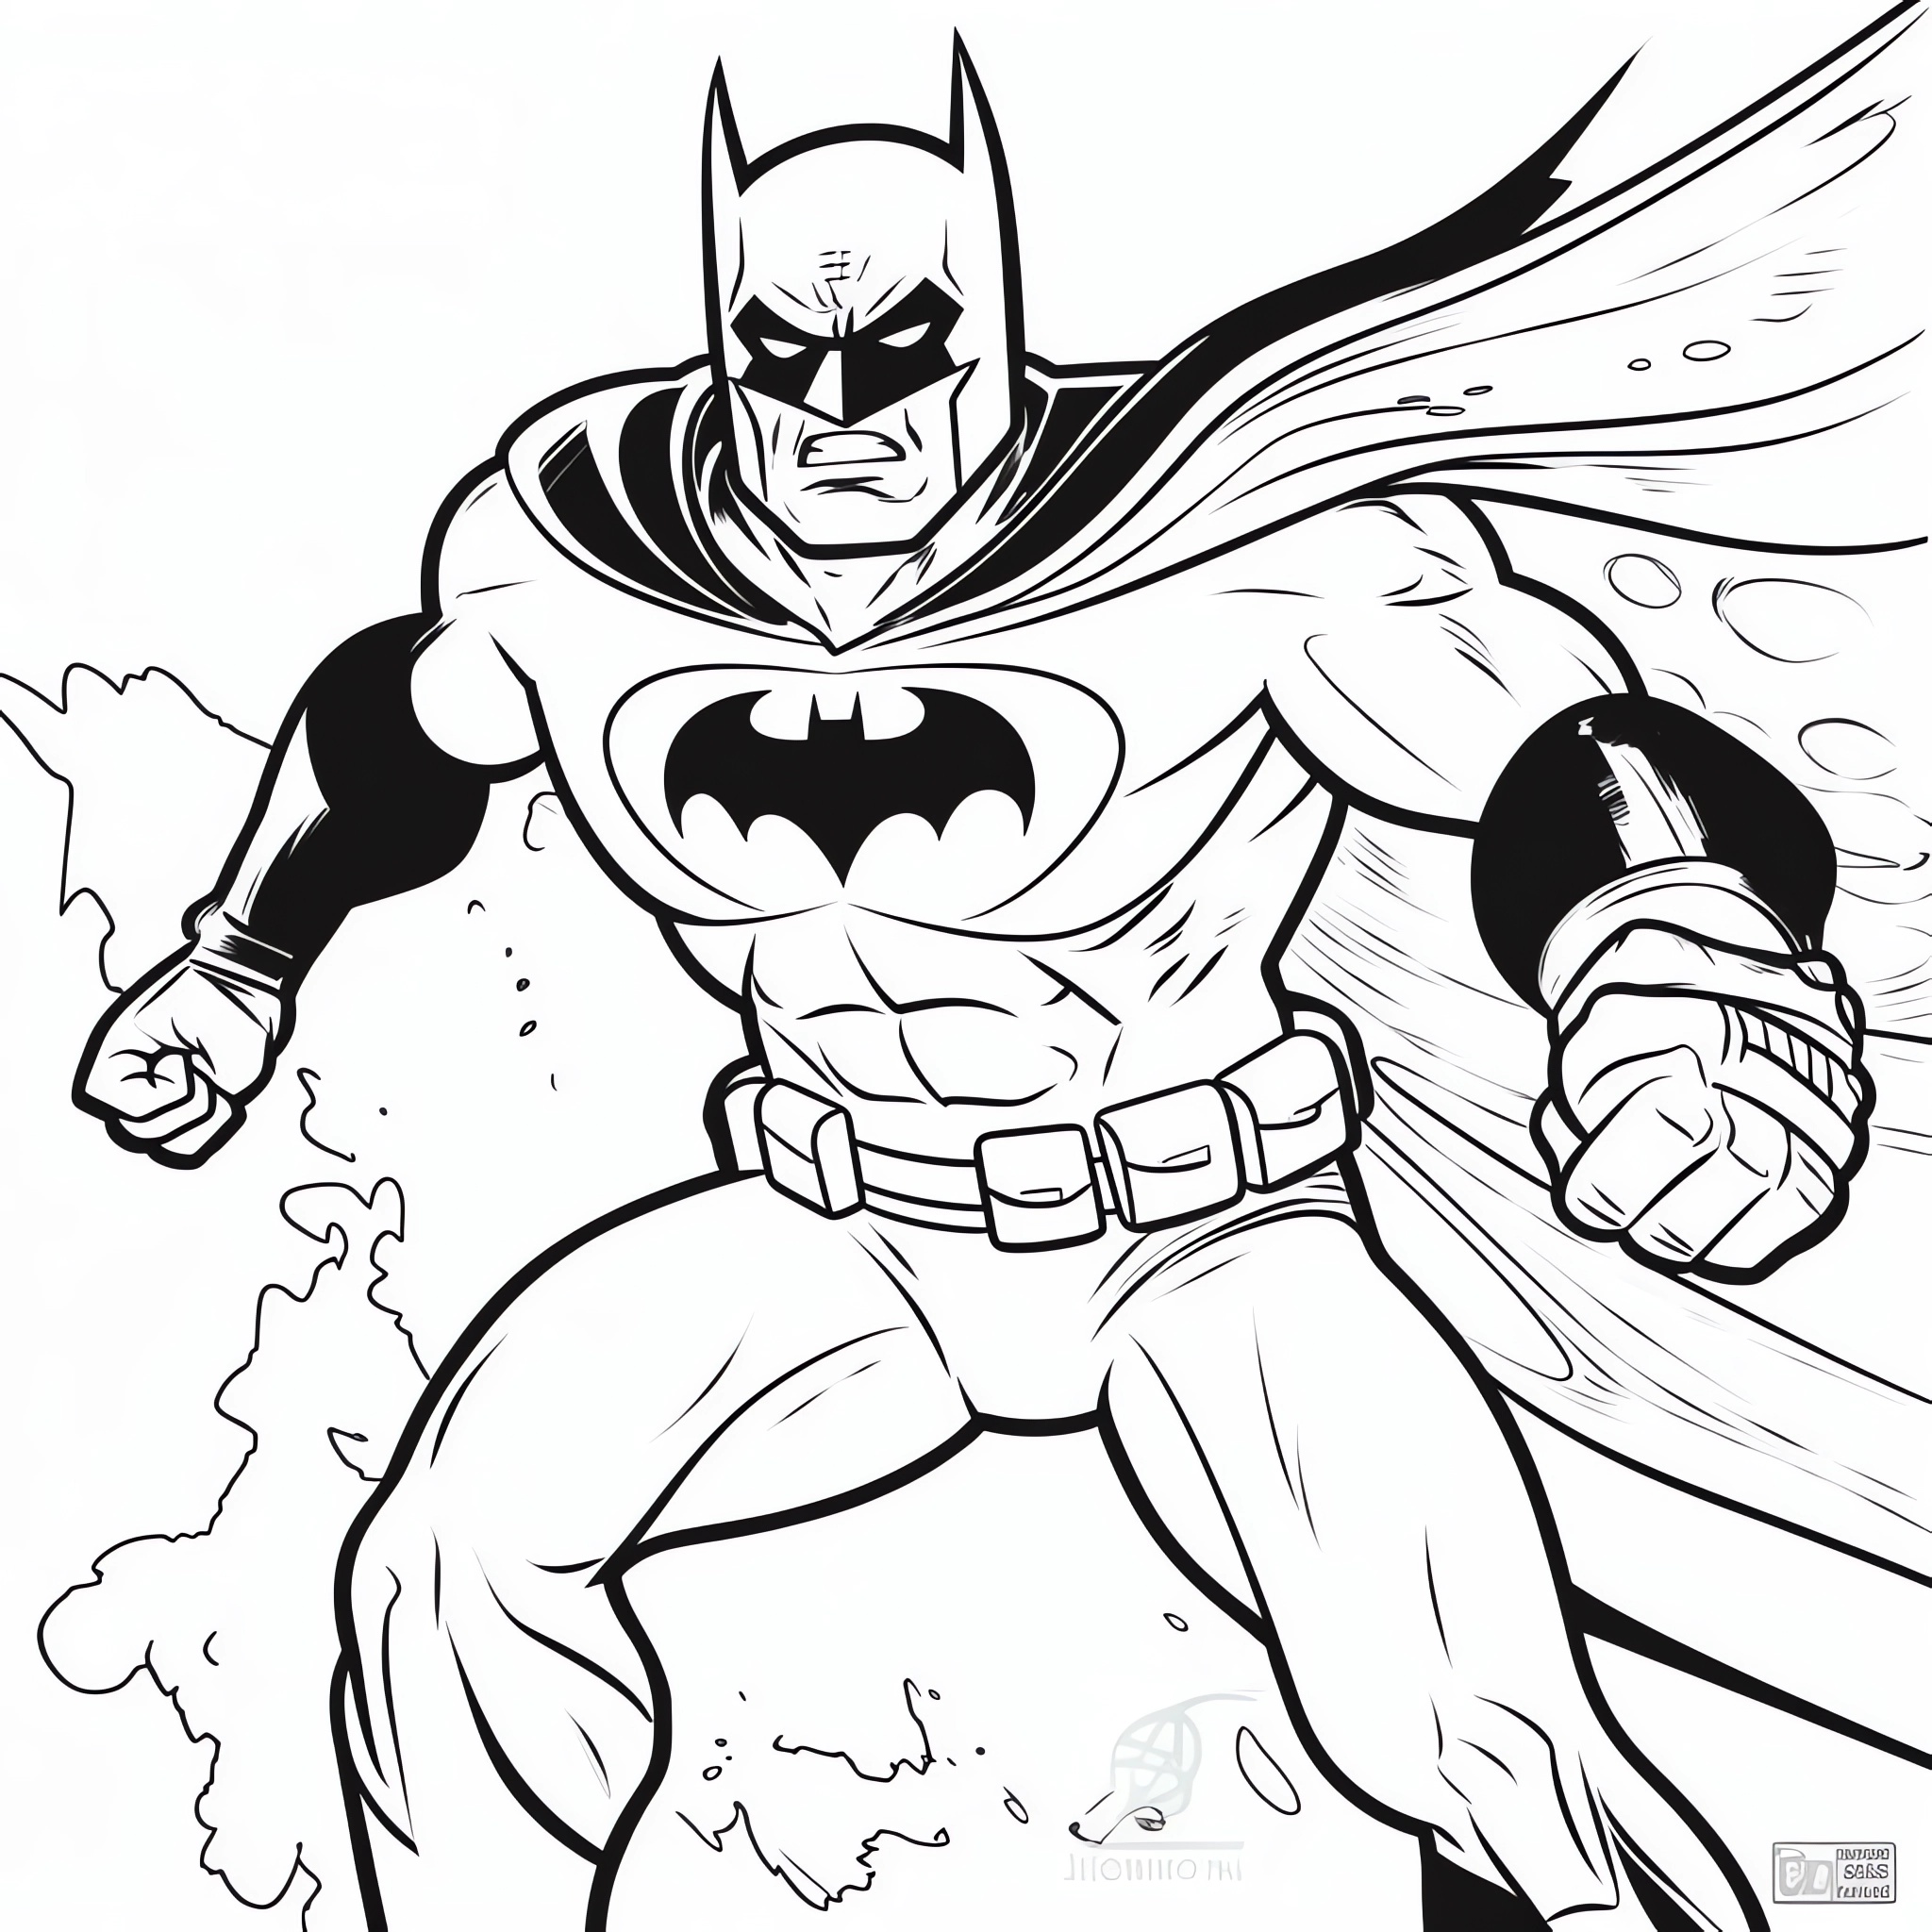 Batman 34 Batman coloring page to print and coloring